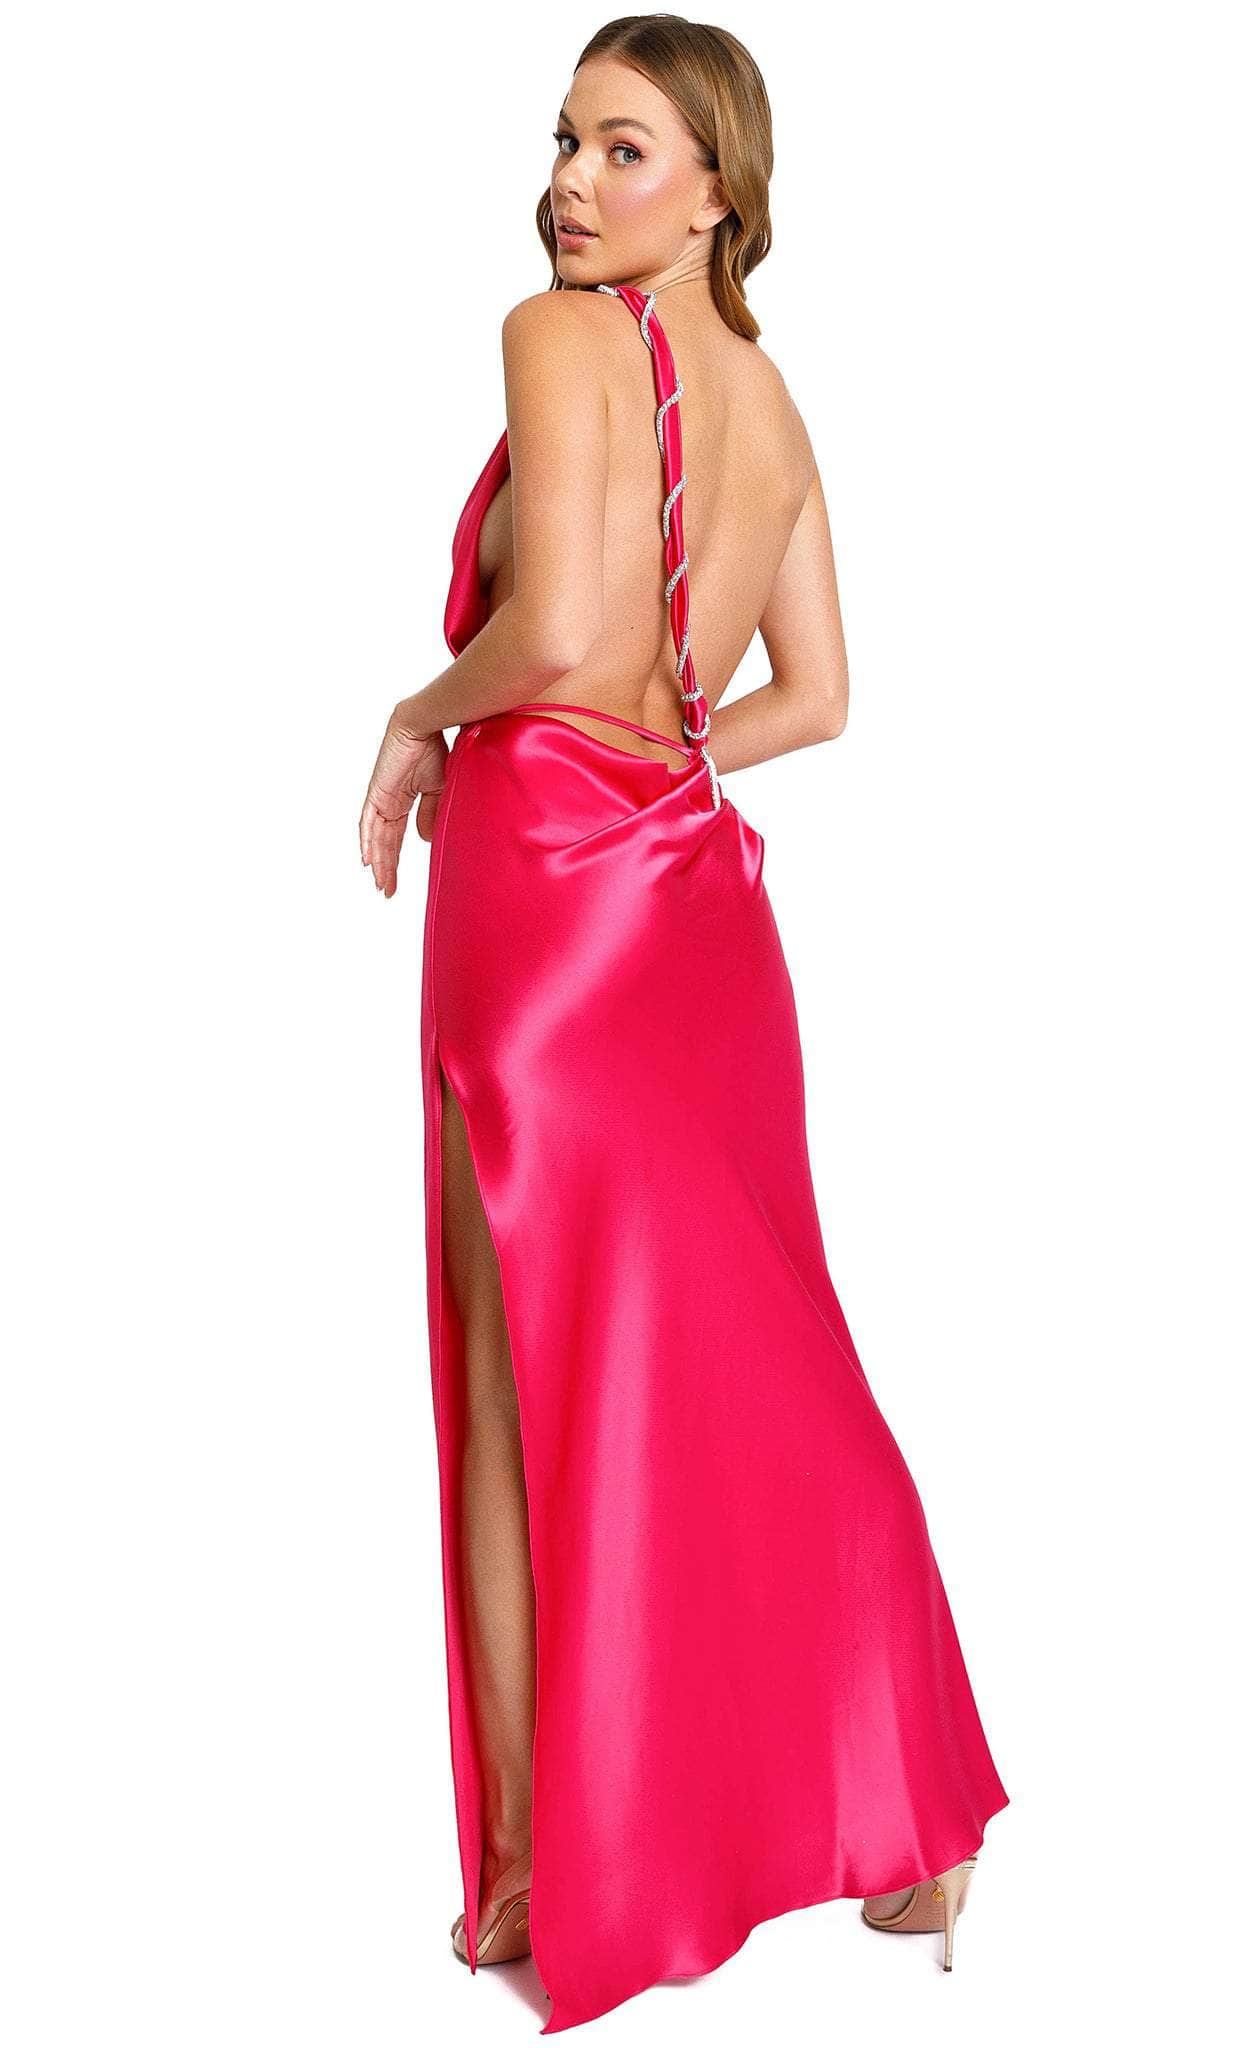 Nicole Bakti 7229 - Satin Prom Dress Special Occasion Dress